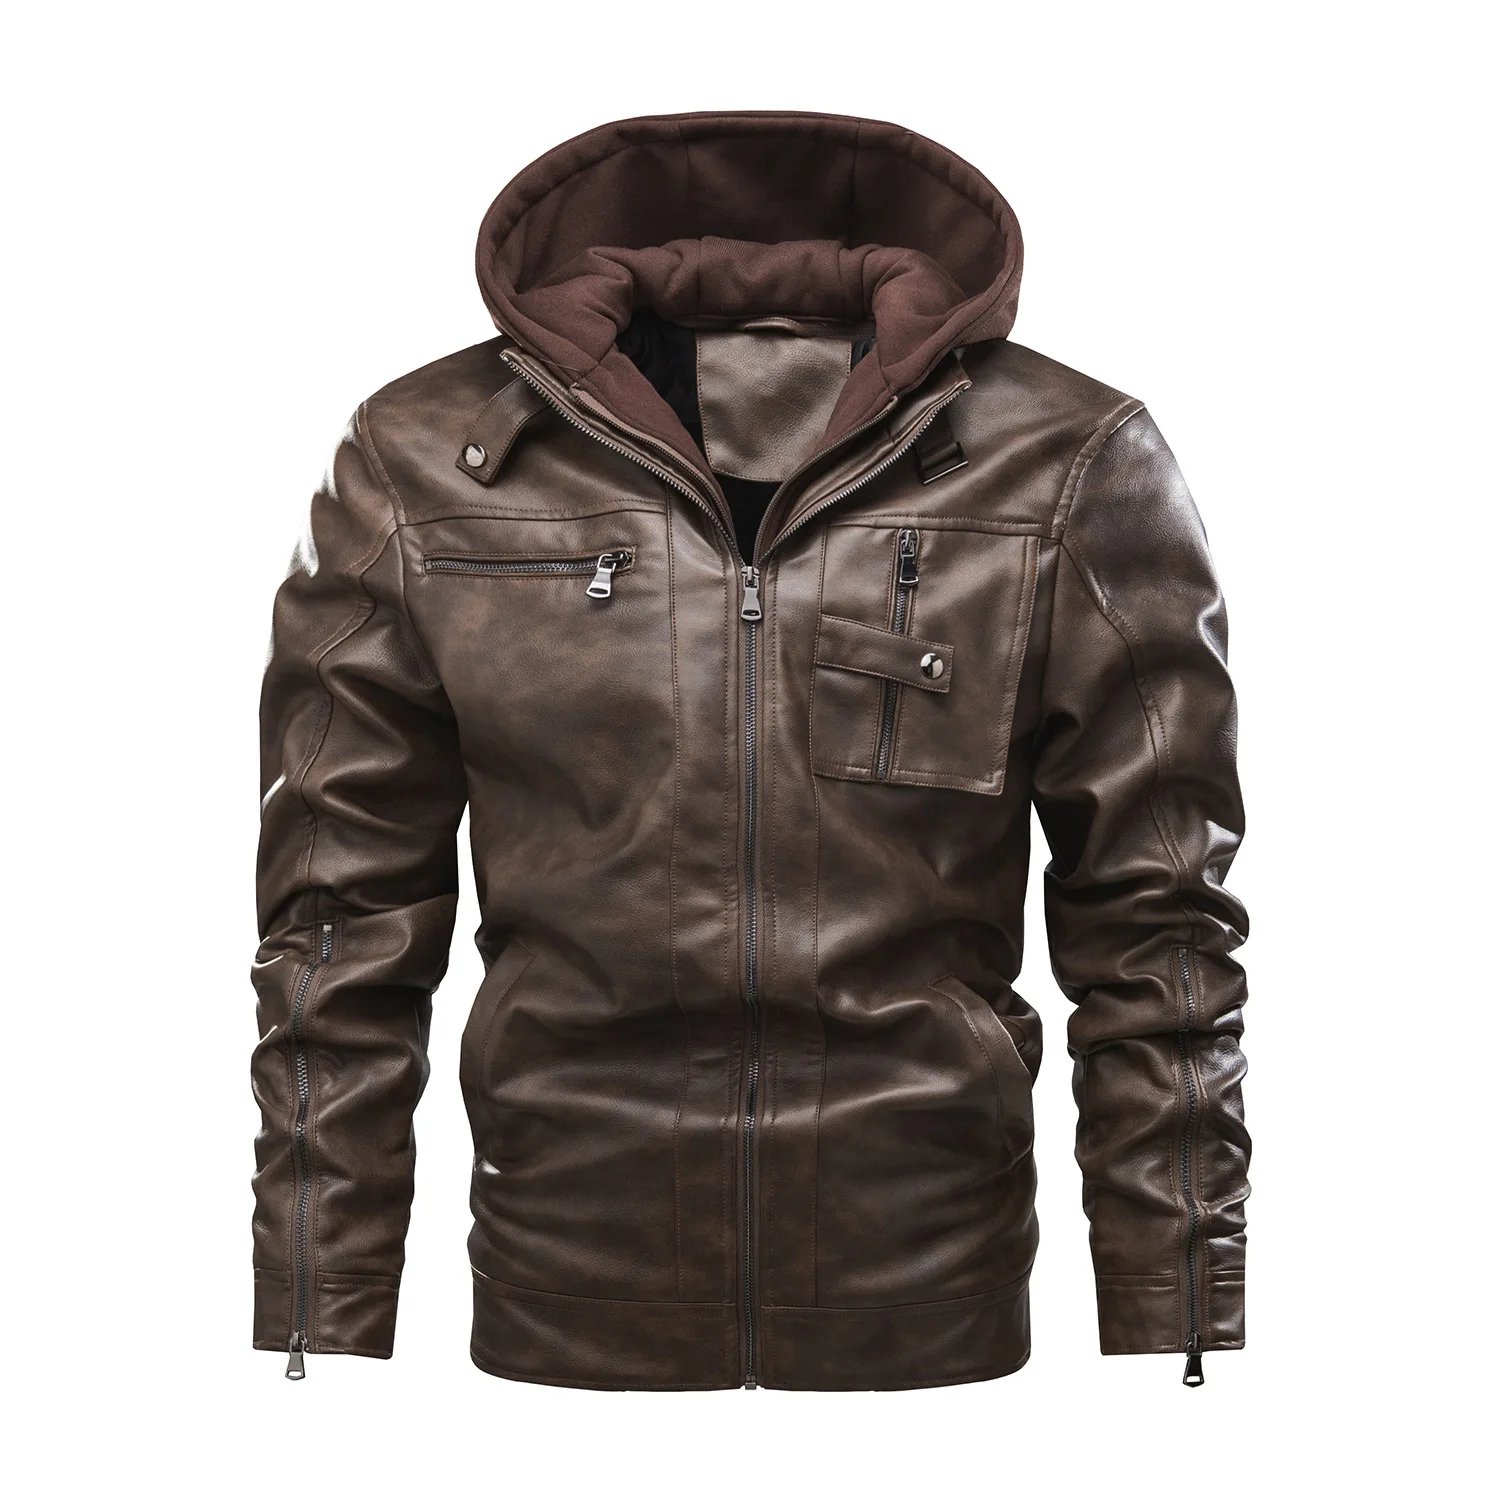 Men's PU Leather Jacket Multi Pocket  Winter Jacket Removable Hooded Coat US Size S/M/L/XL/2XL